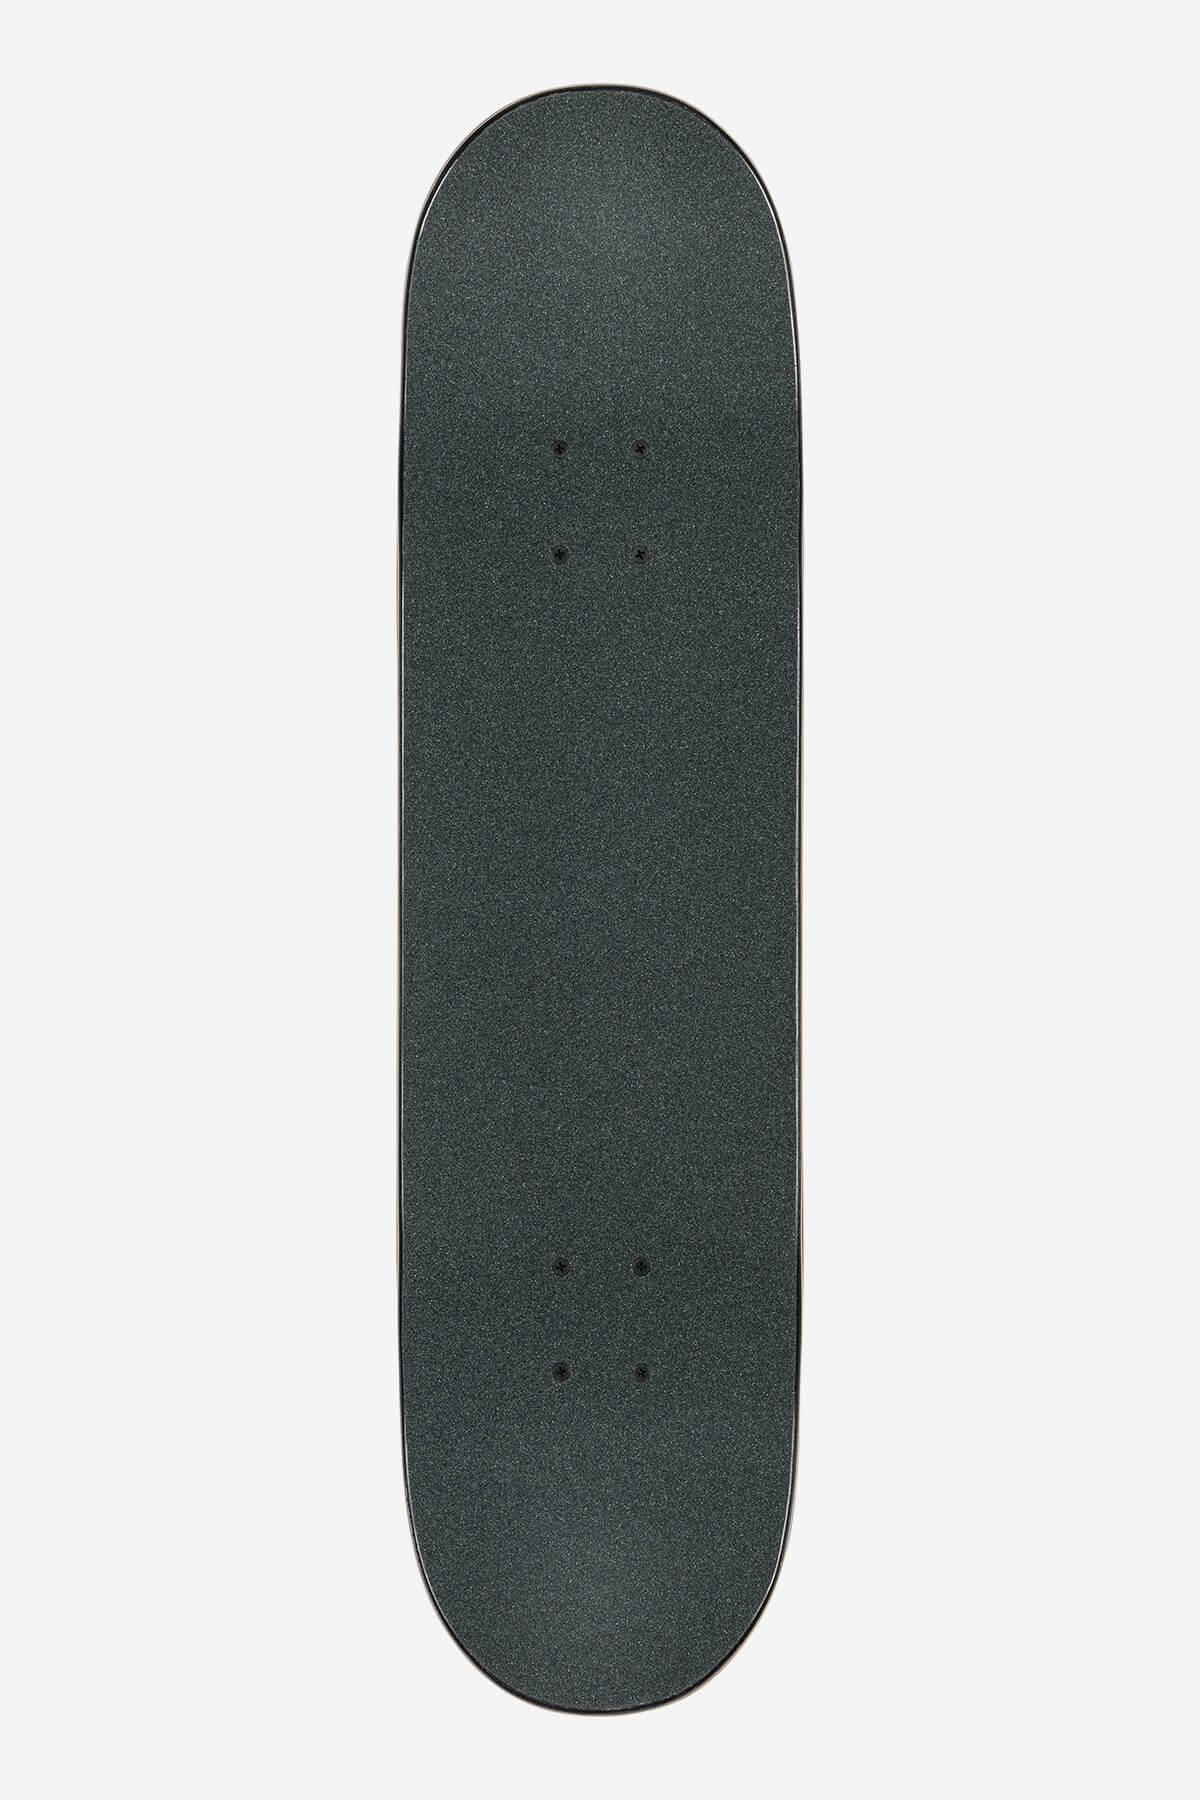 g1 argo 8.125" complet skateboard + sac à dos dakine